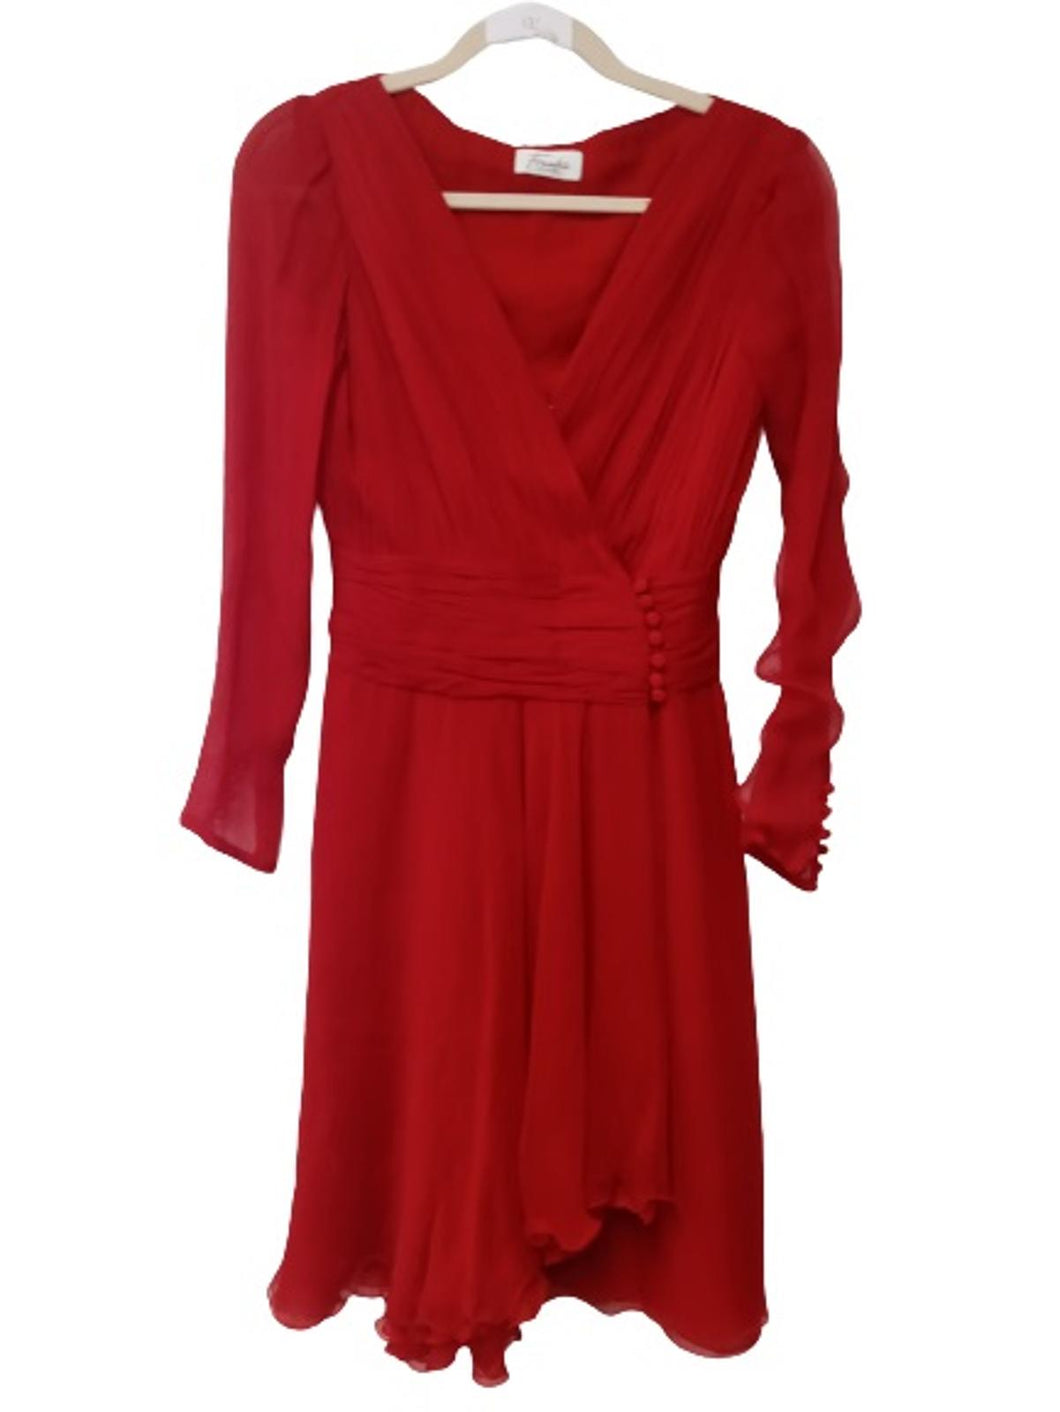 FRANKA LONDON Ladies Red Long Sleeve V-Neck Wrap Dress Size UK10